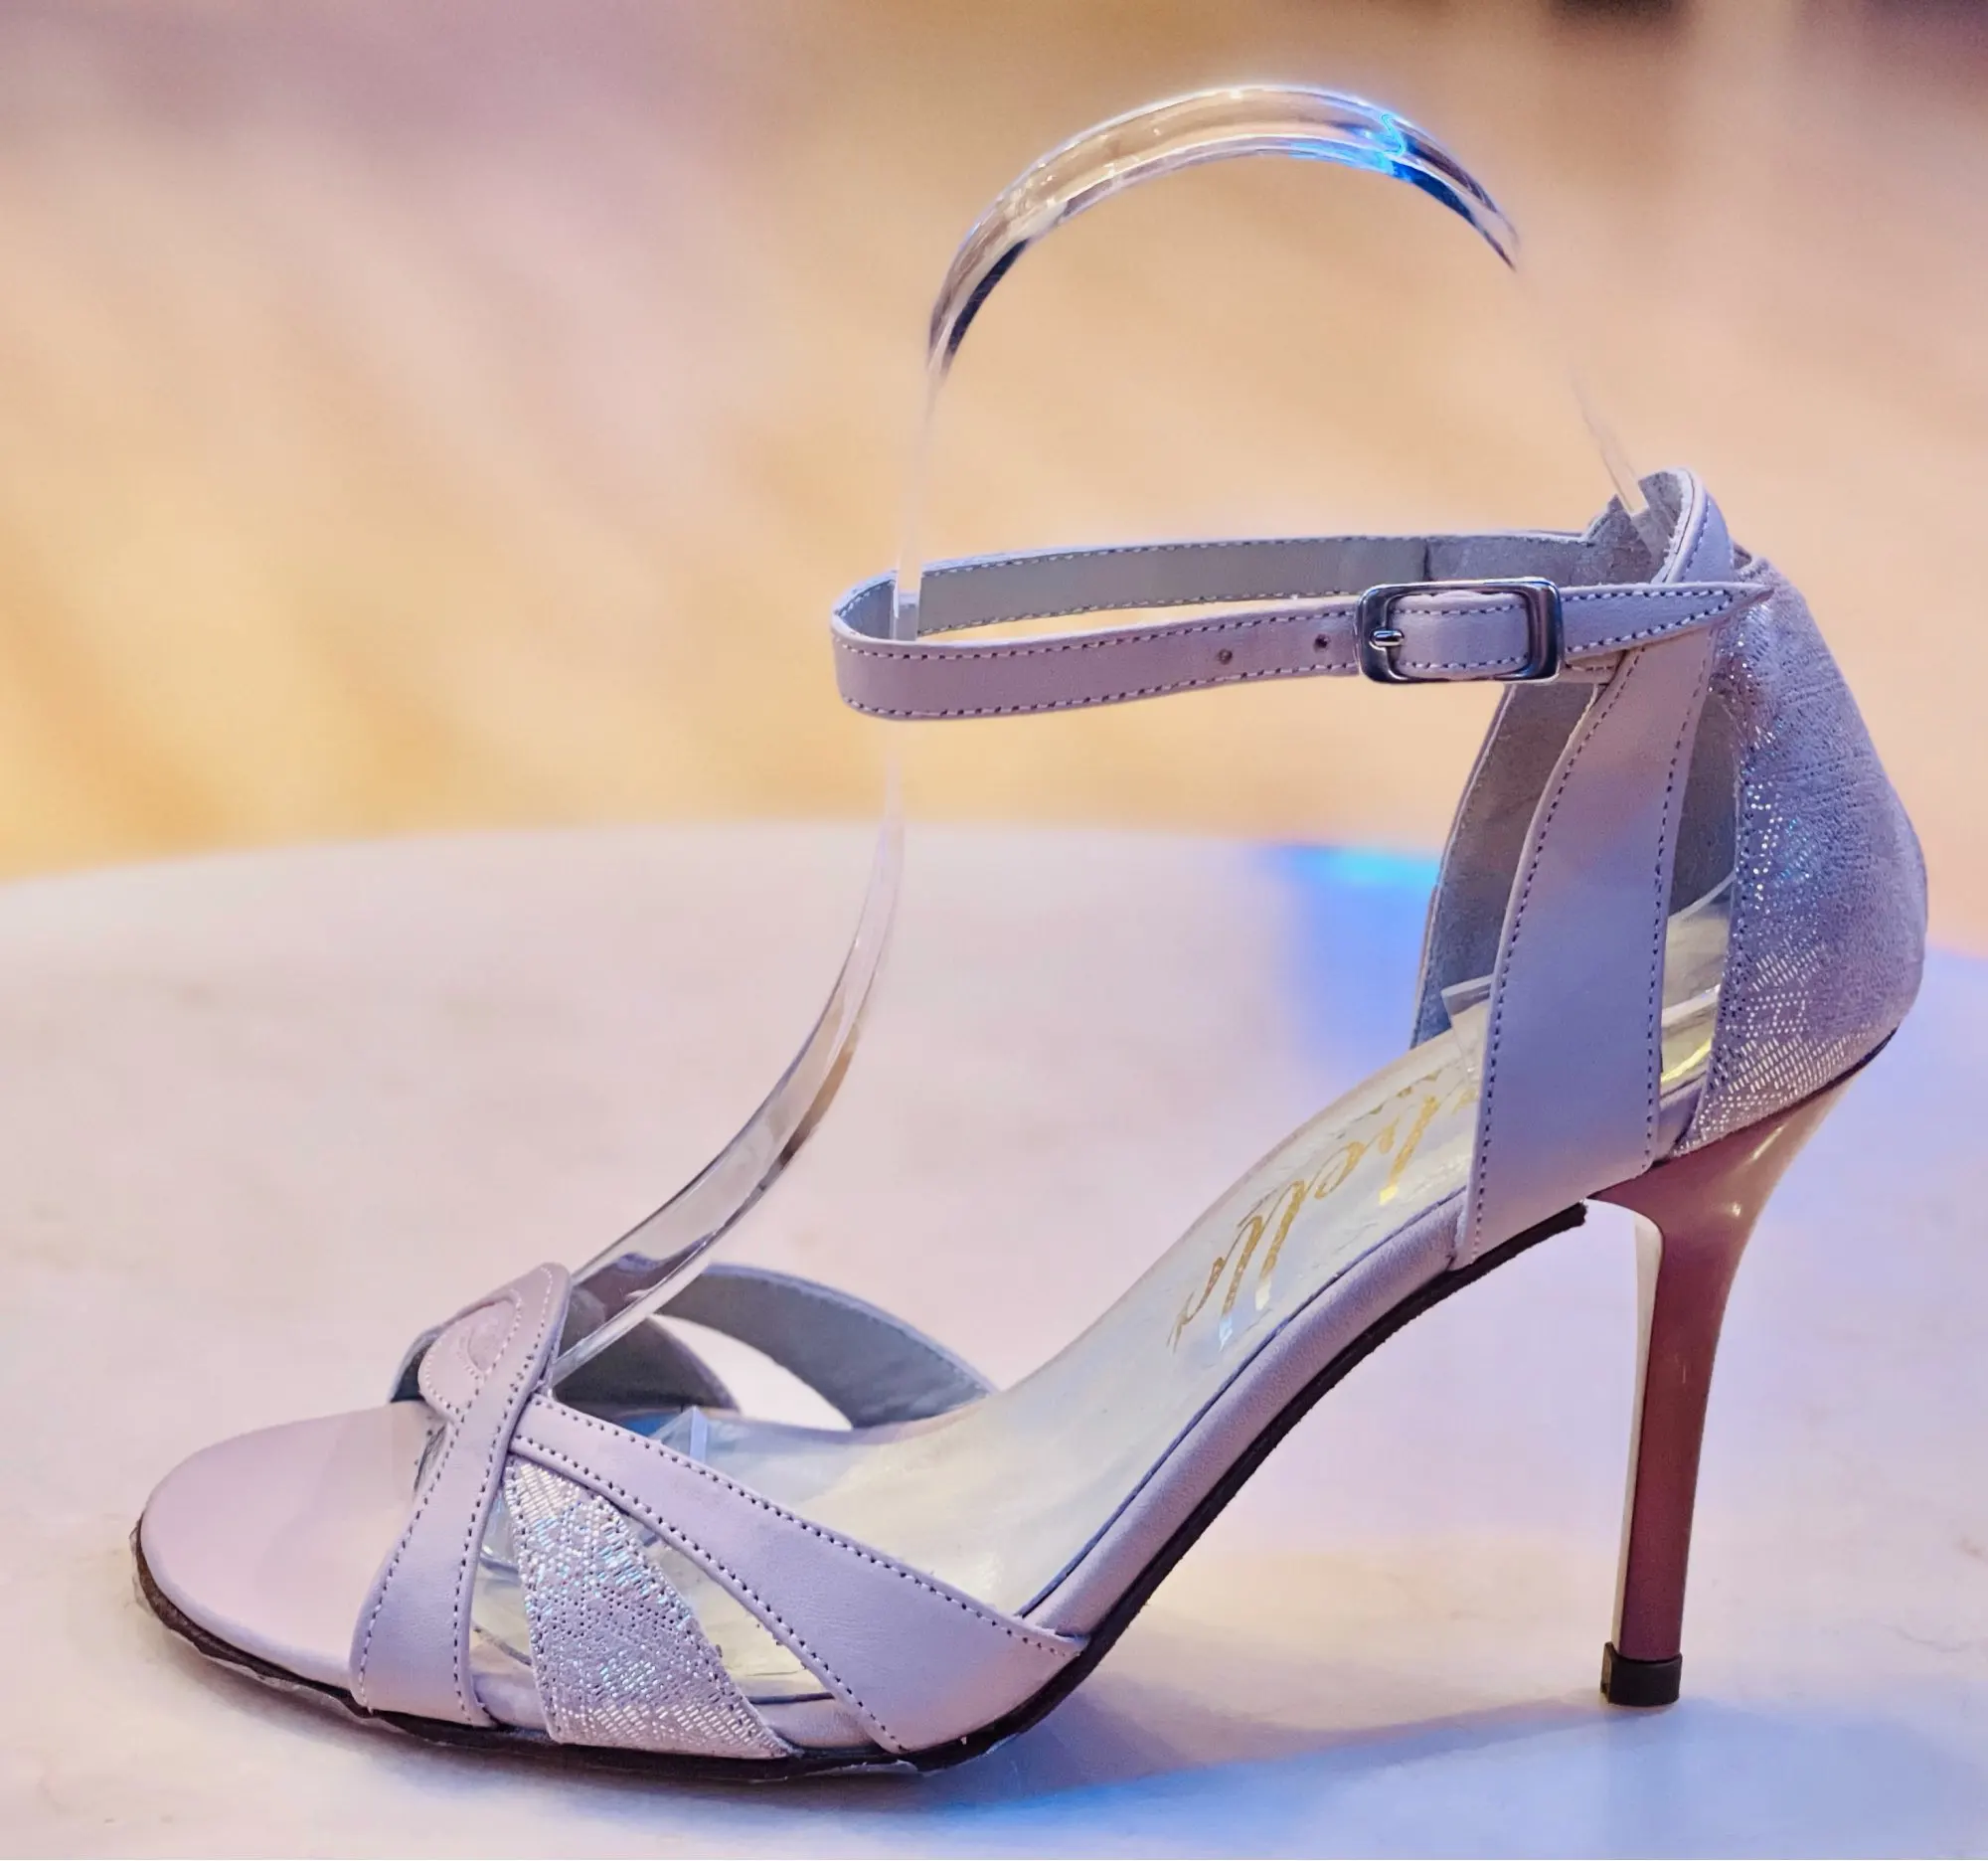 4PCS Women Clear Acrylic Plastic Sandal Lady Shoes Display Stand Insert HolderJK 